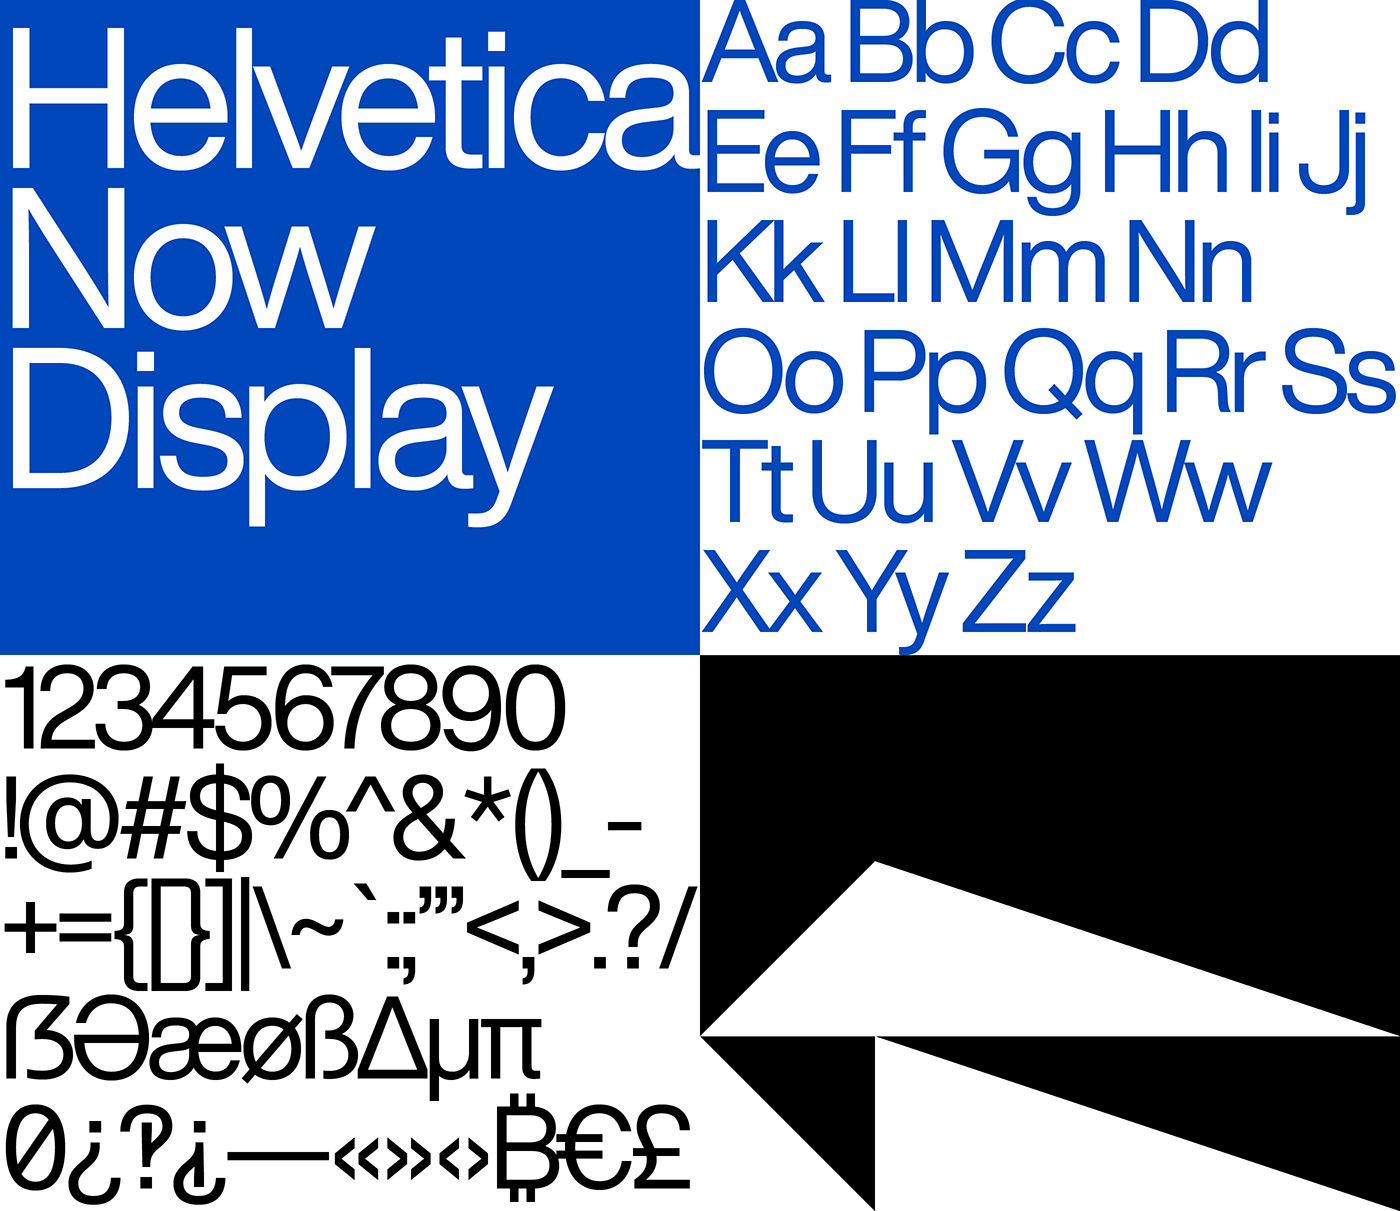 Brand typography of Everhome.